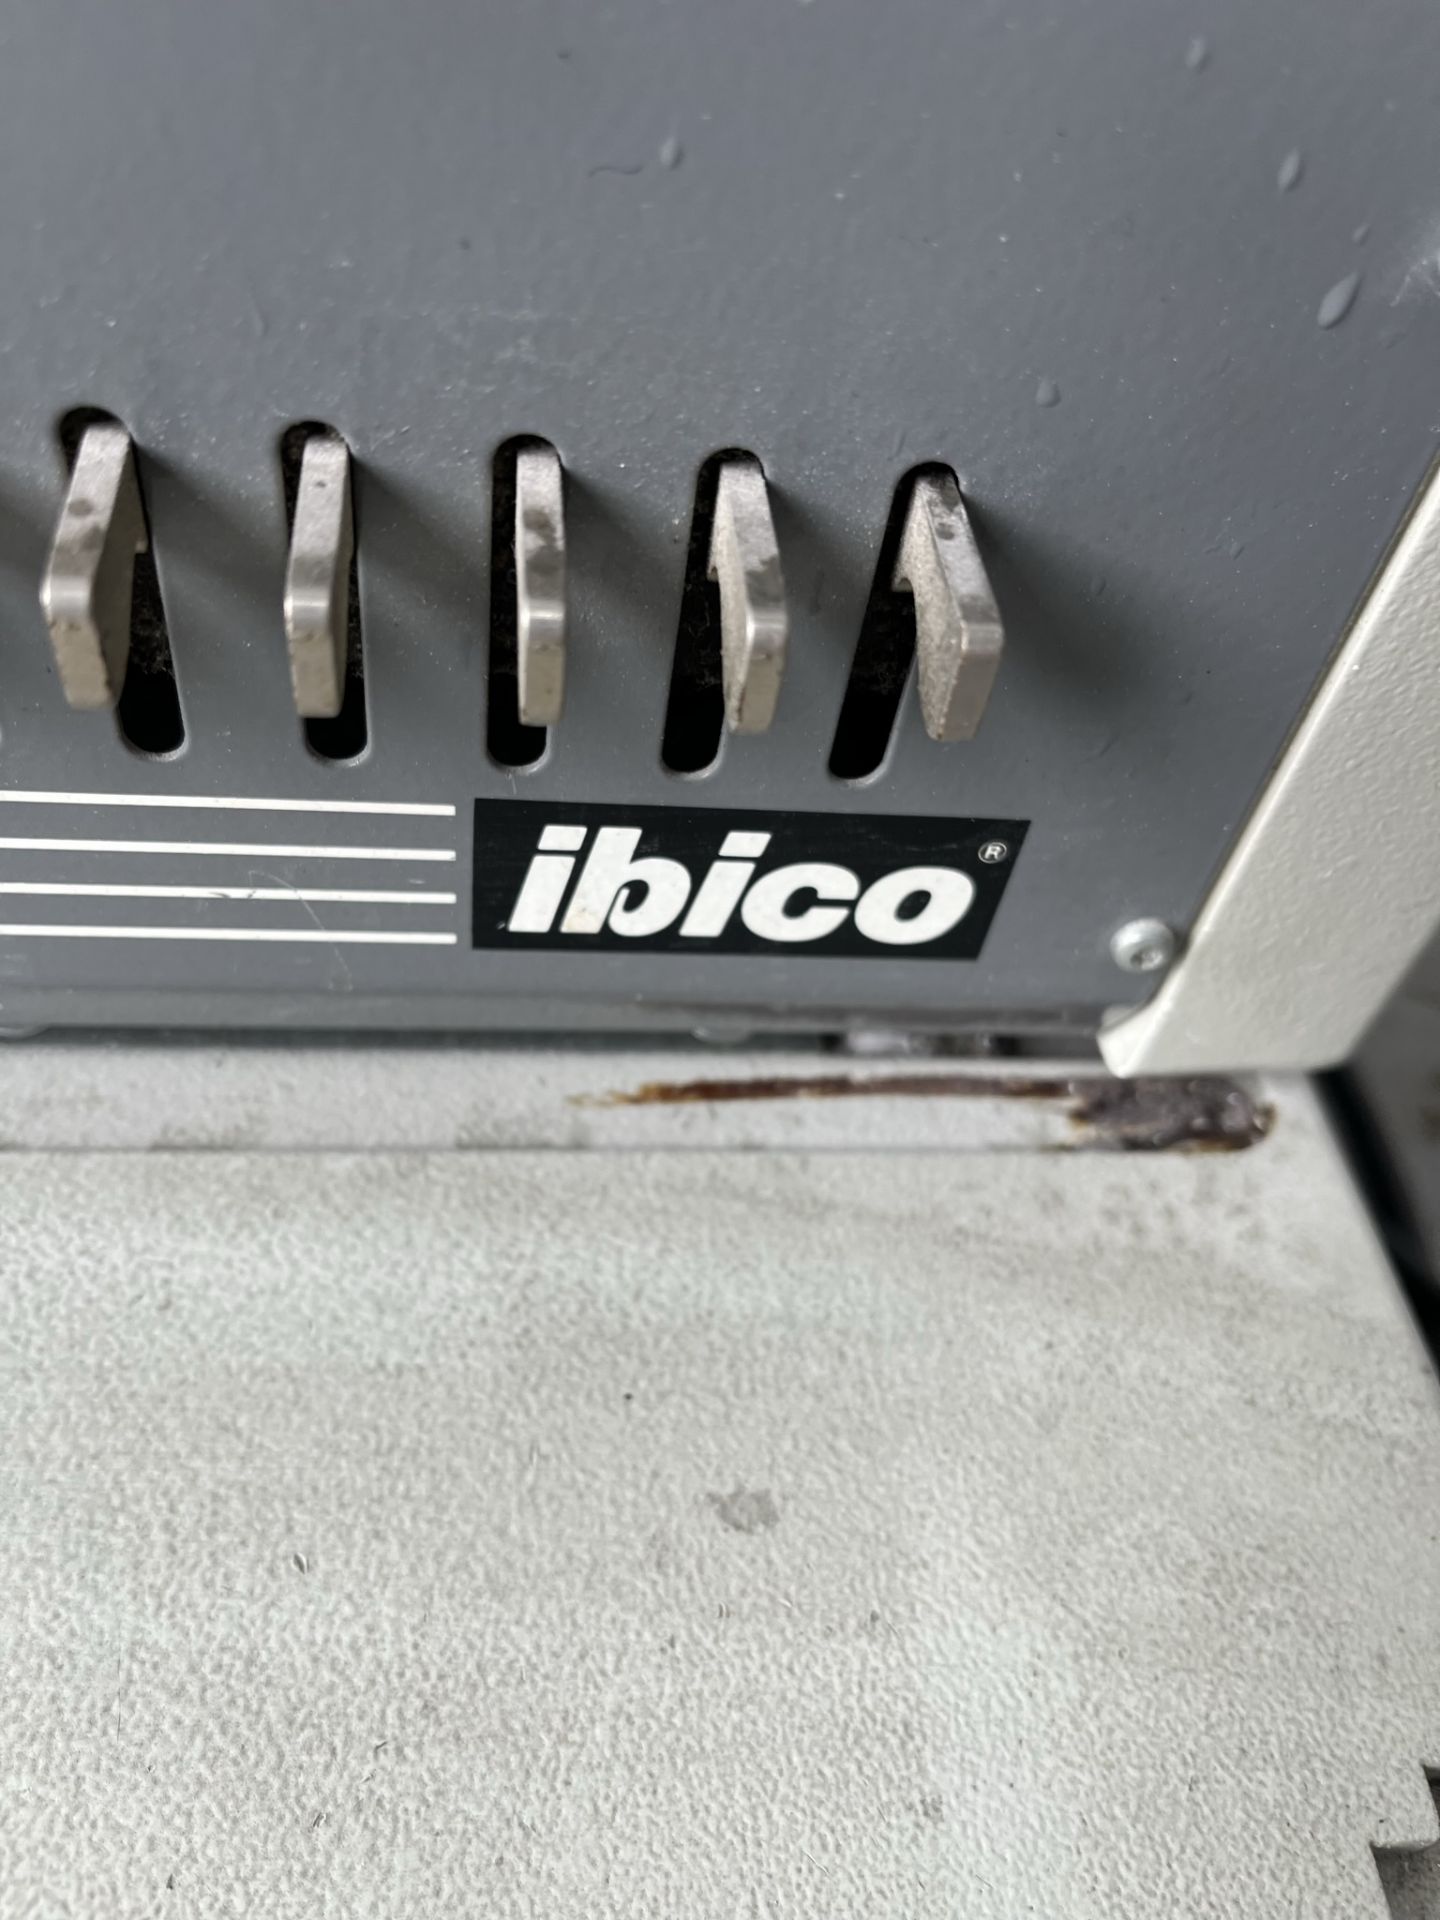 Ibico EPk-21 Commercial Plastic Comb Electric Binding Machine - Image 4 of 5